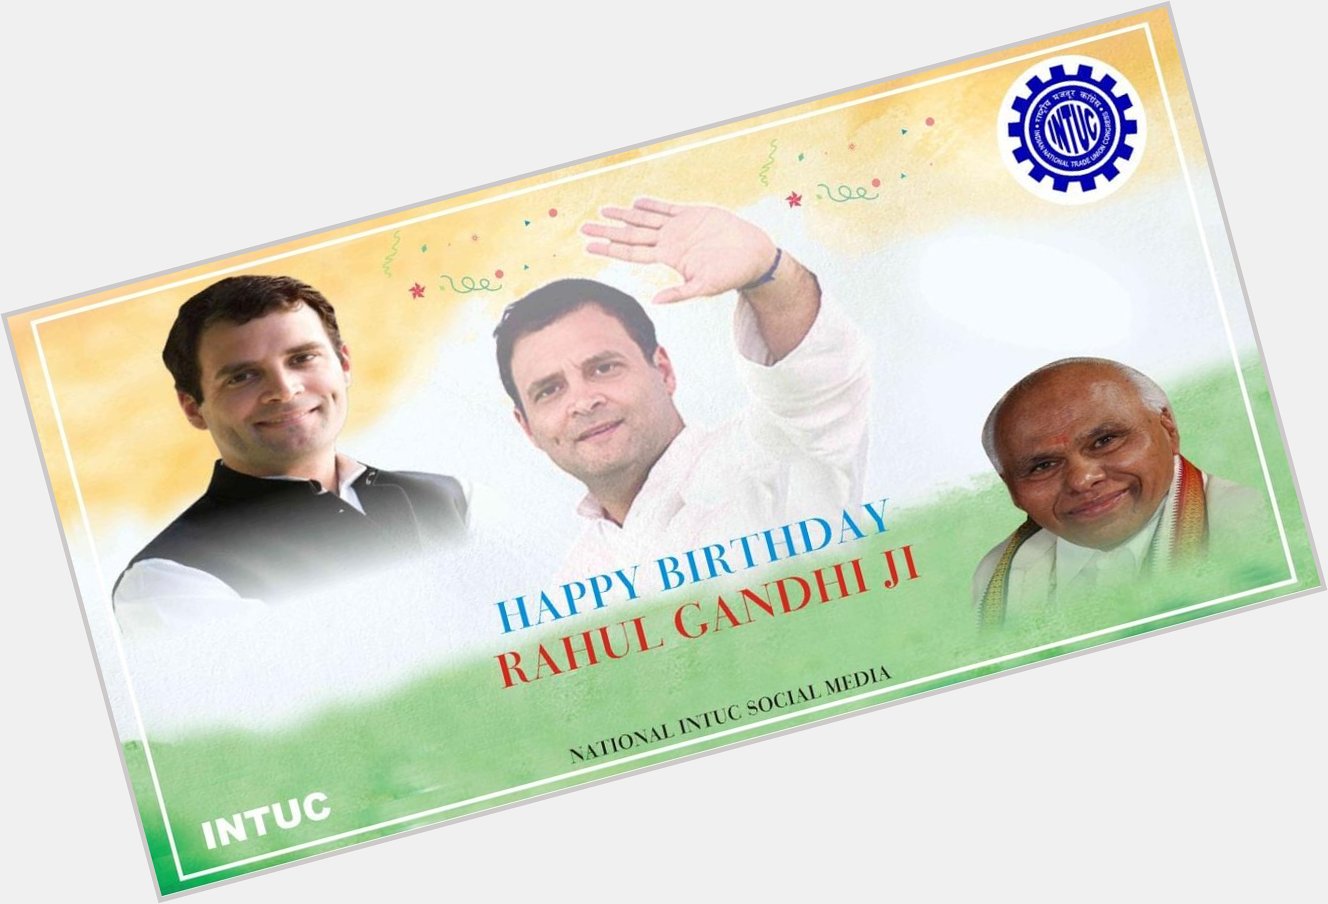 Happy Birthday to Shri Rahul Gandhi ji 